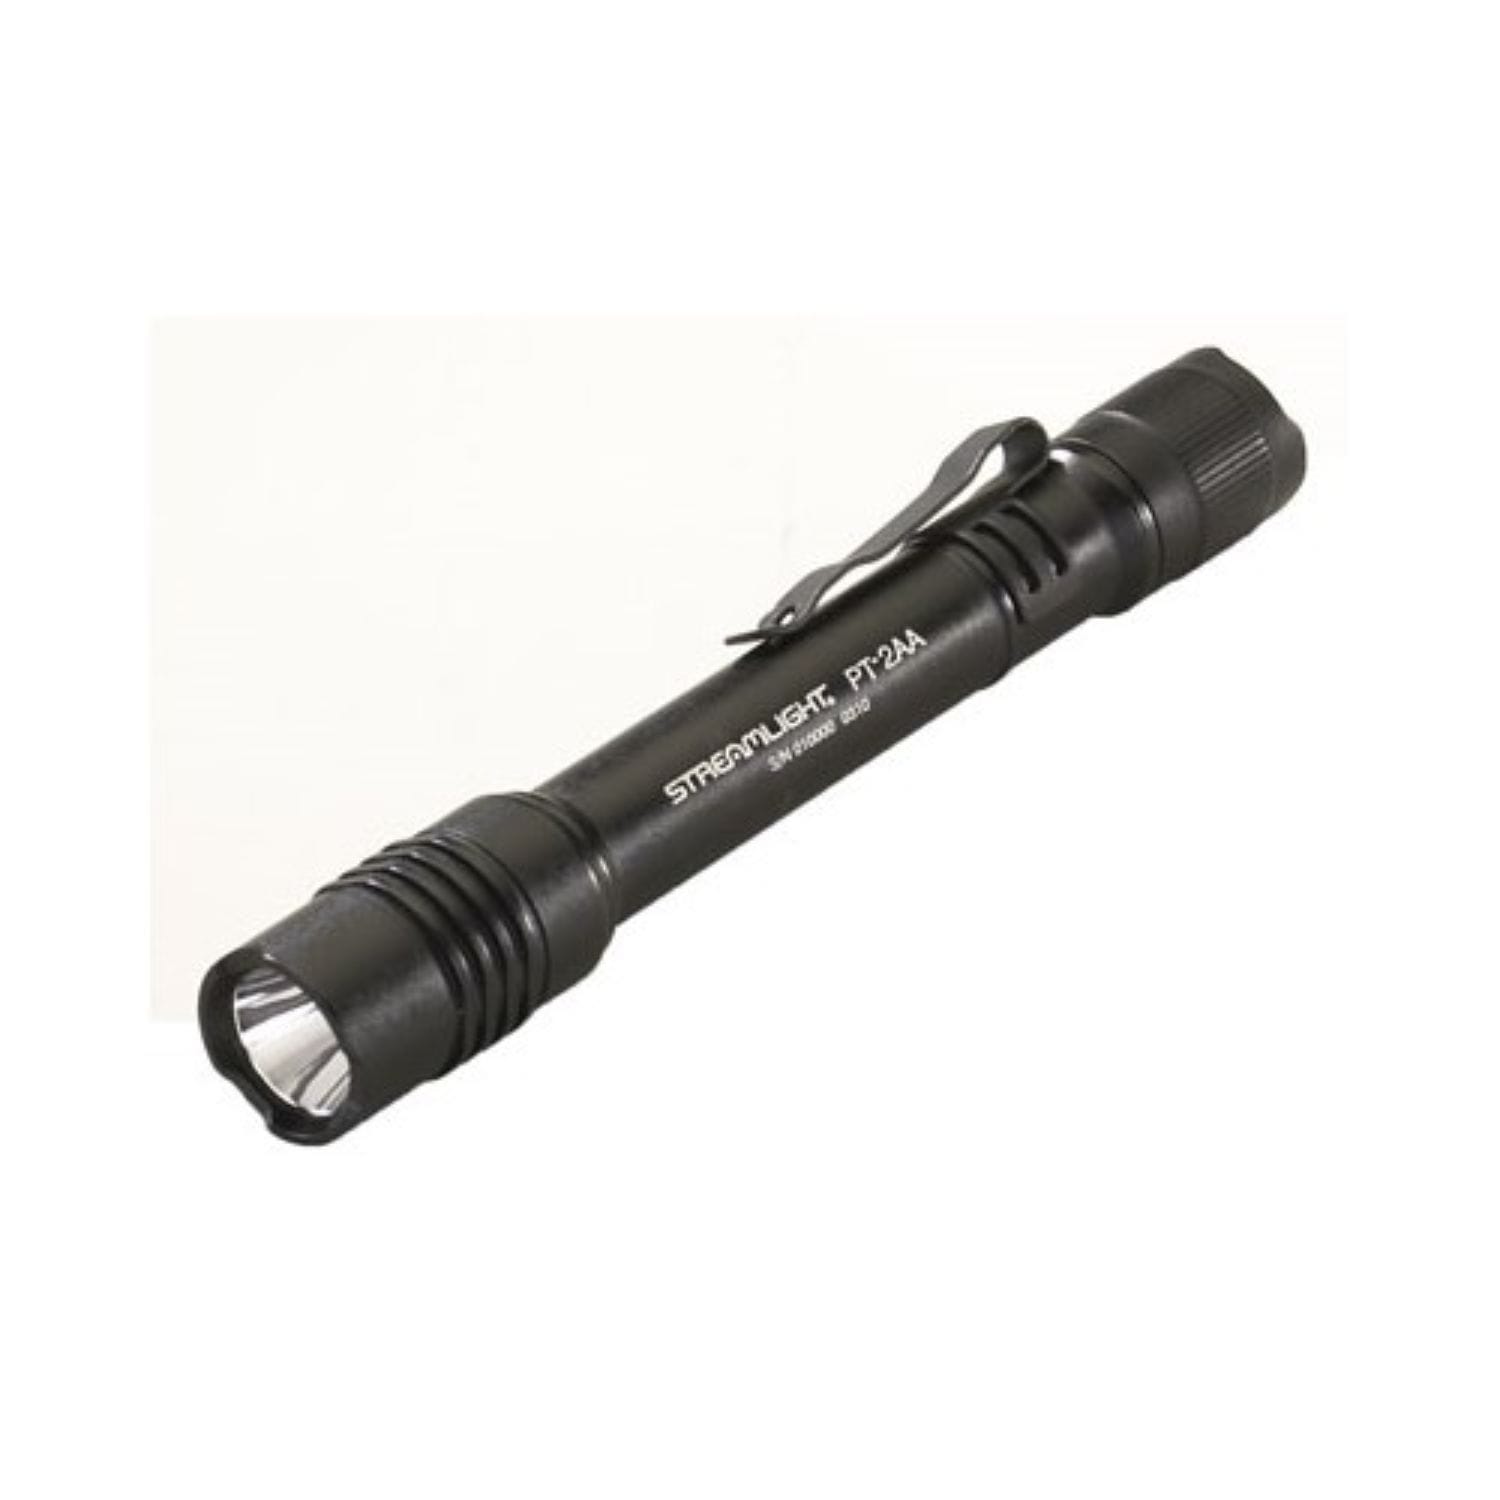 Streamlight Lights : Handheld Lights Streamlight Protac 2AA